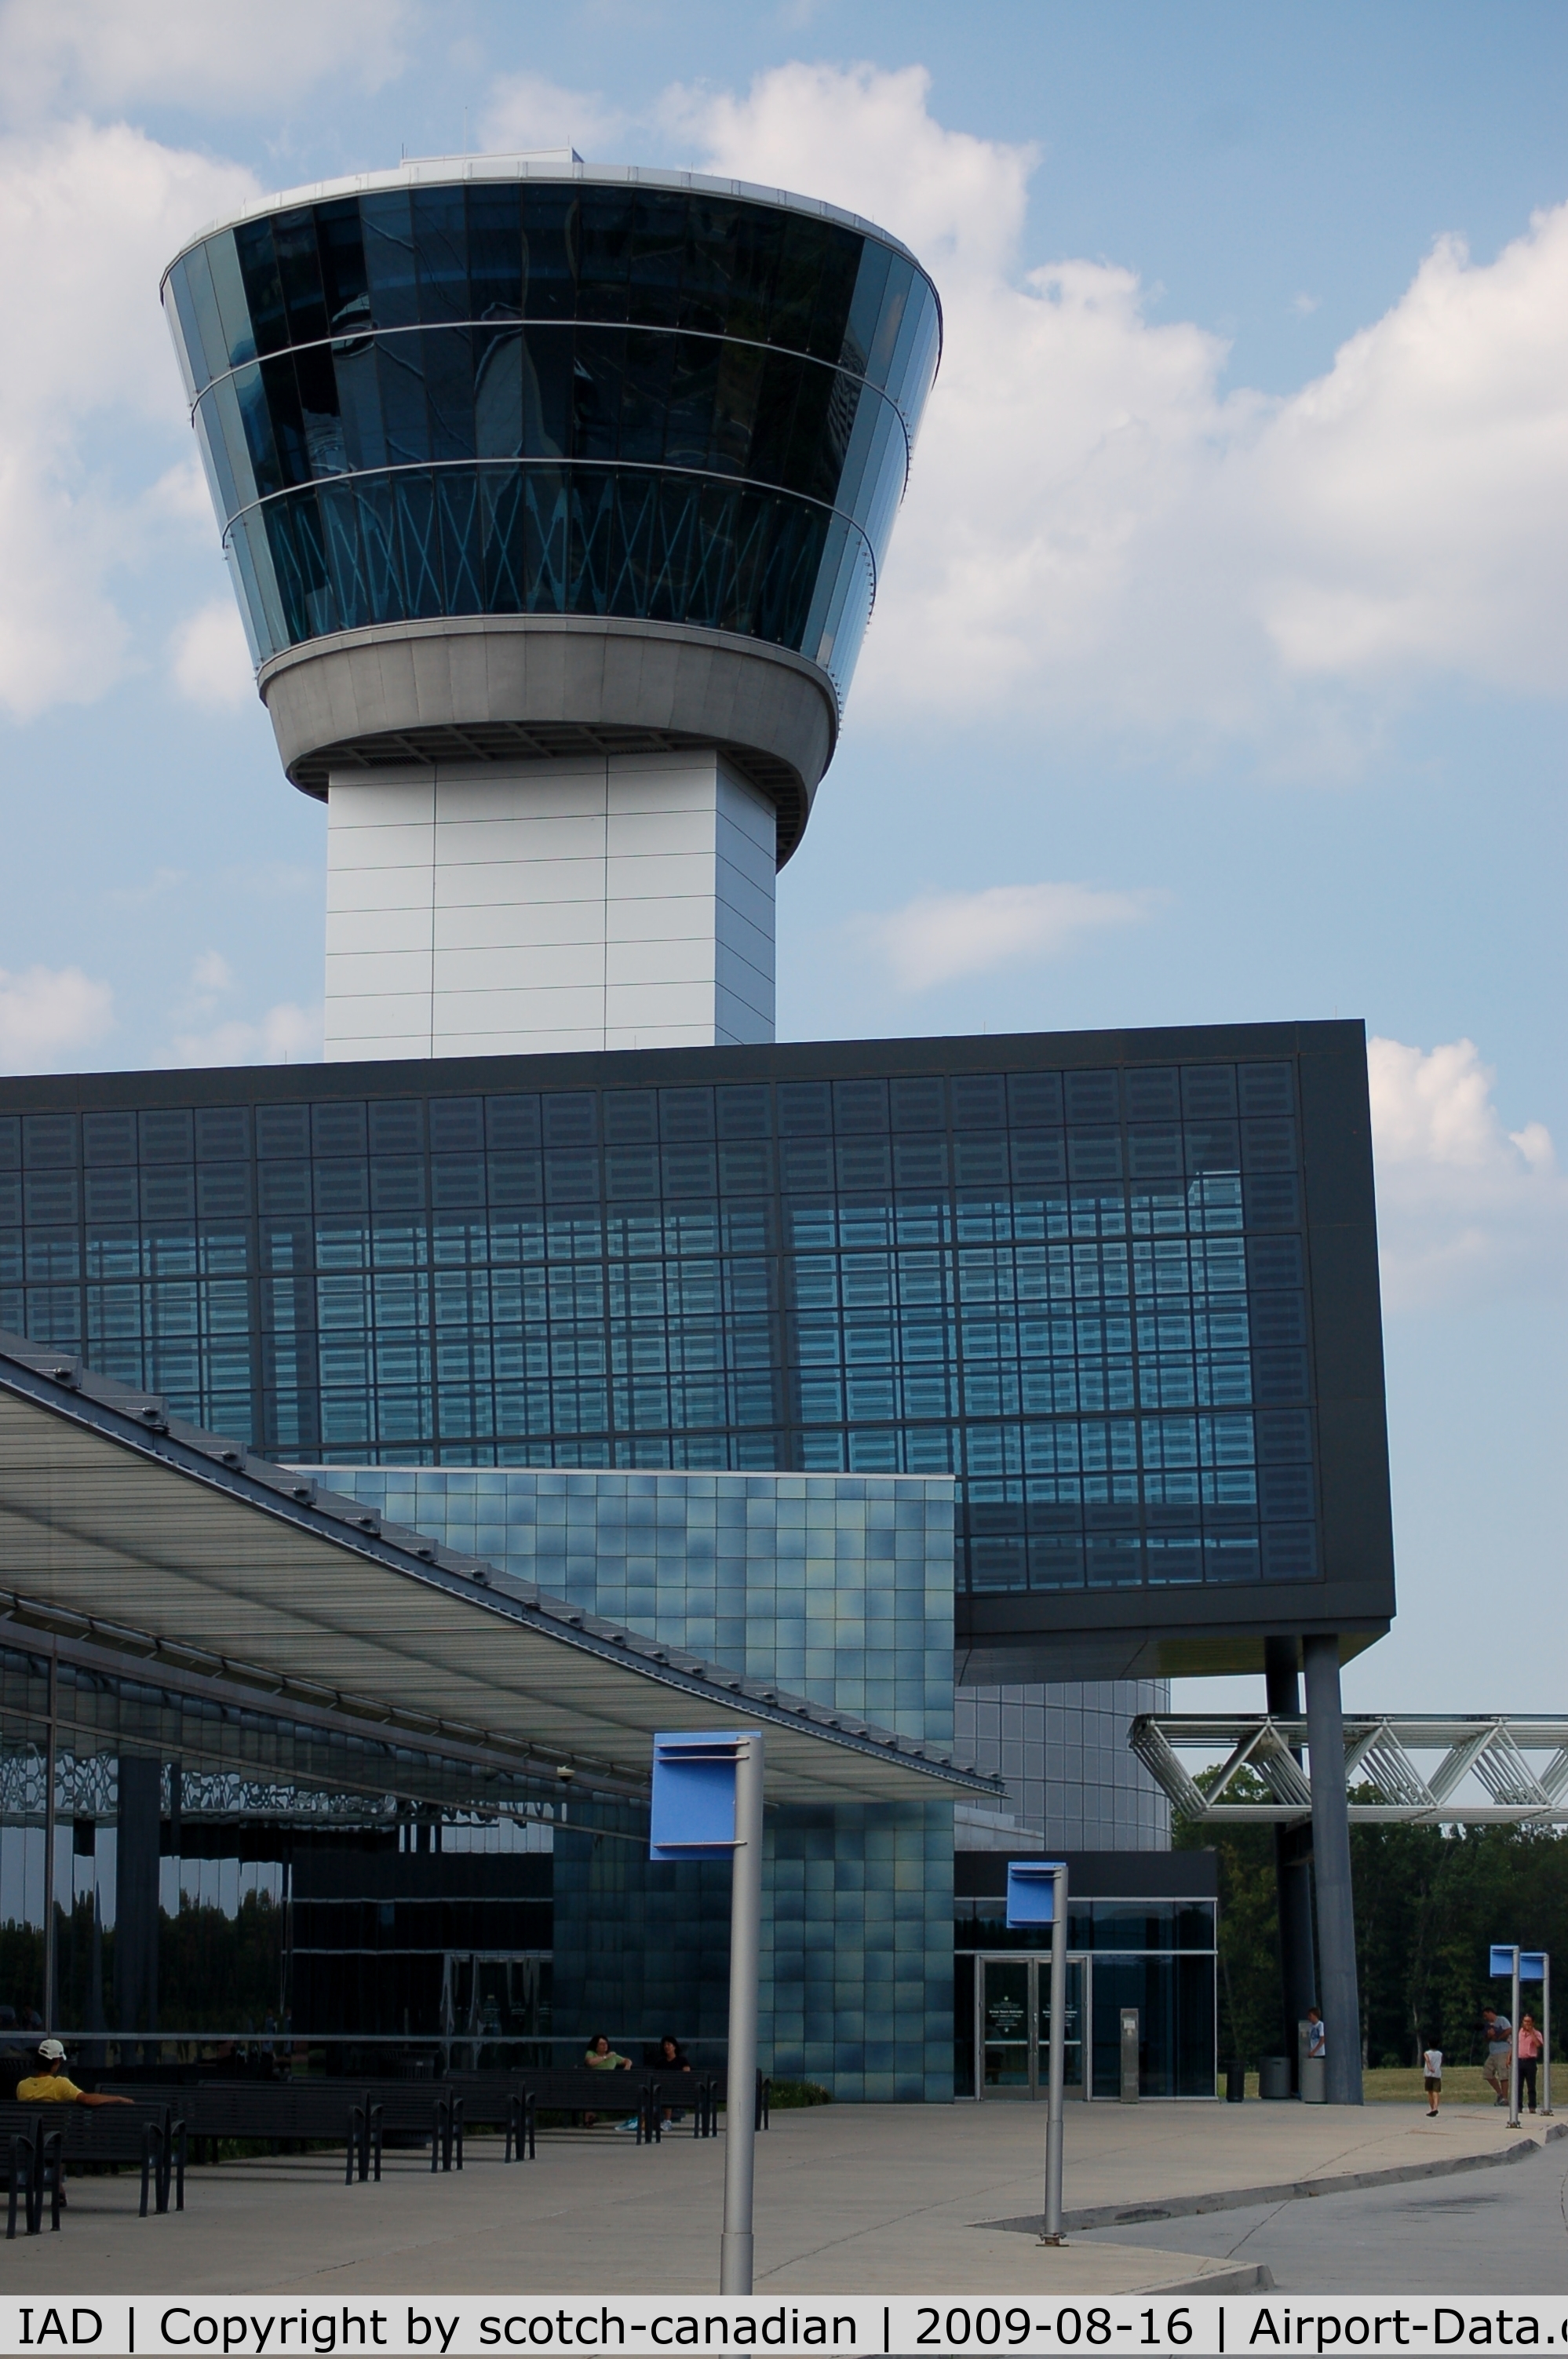 Washington Dulles International Airport (IAD) - Steven F. Udvar-Hazy Center, Smithsonian National Air and Space Museum, Chantilly, VA